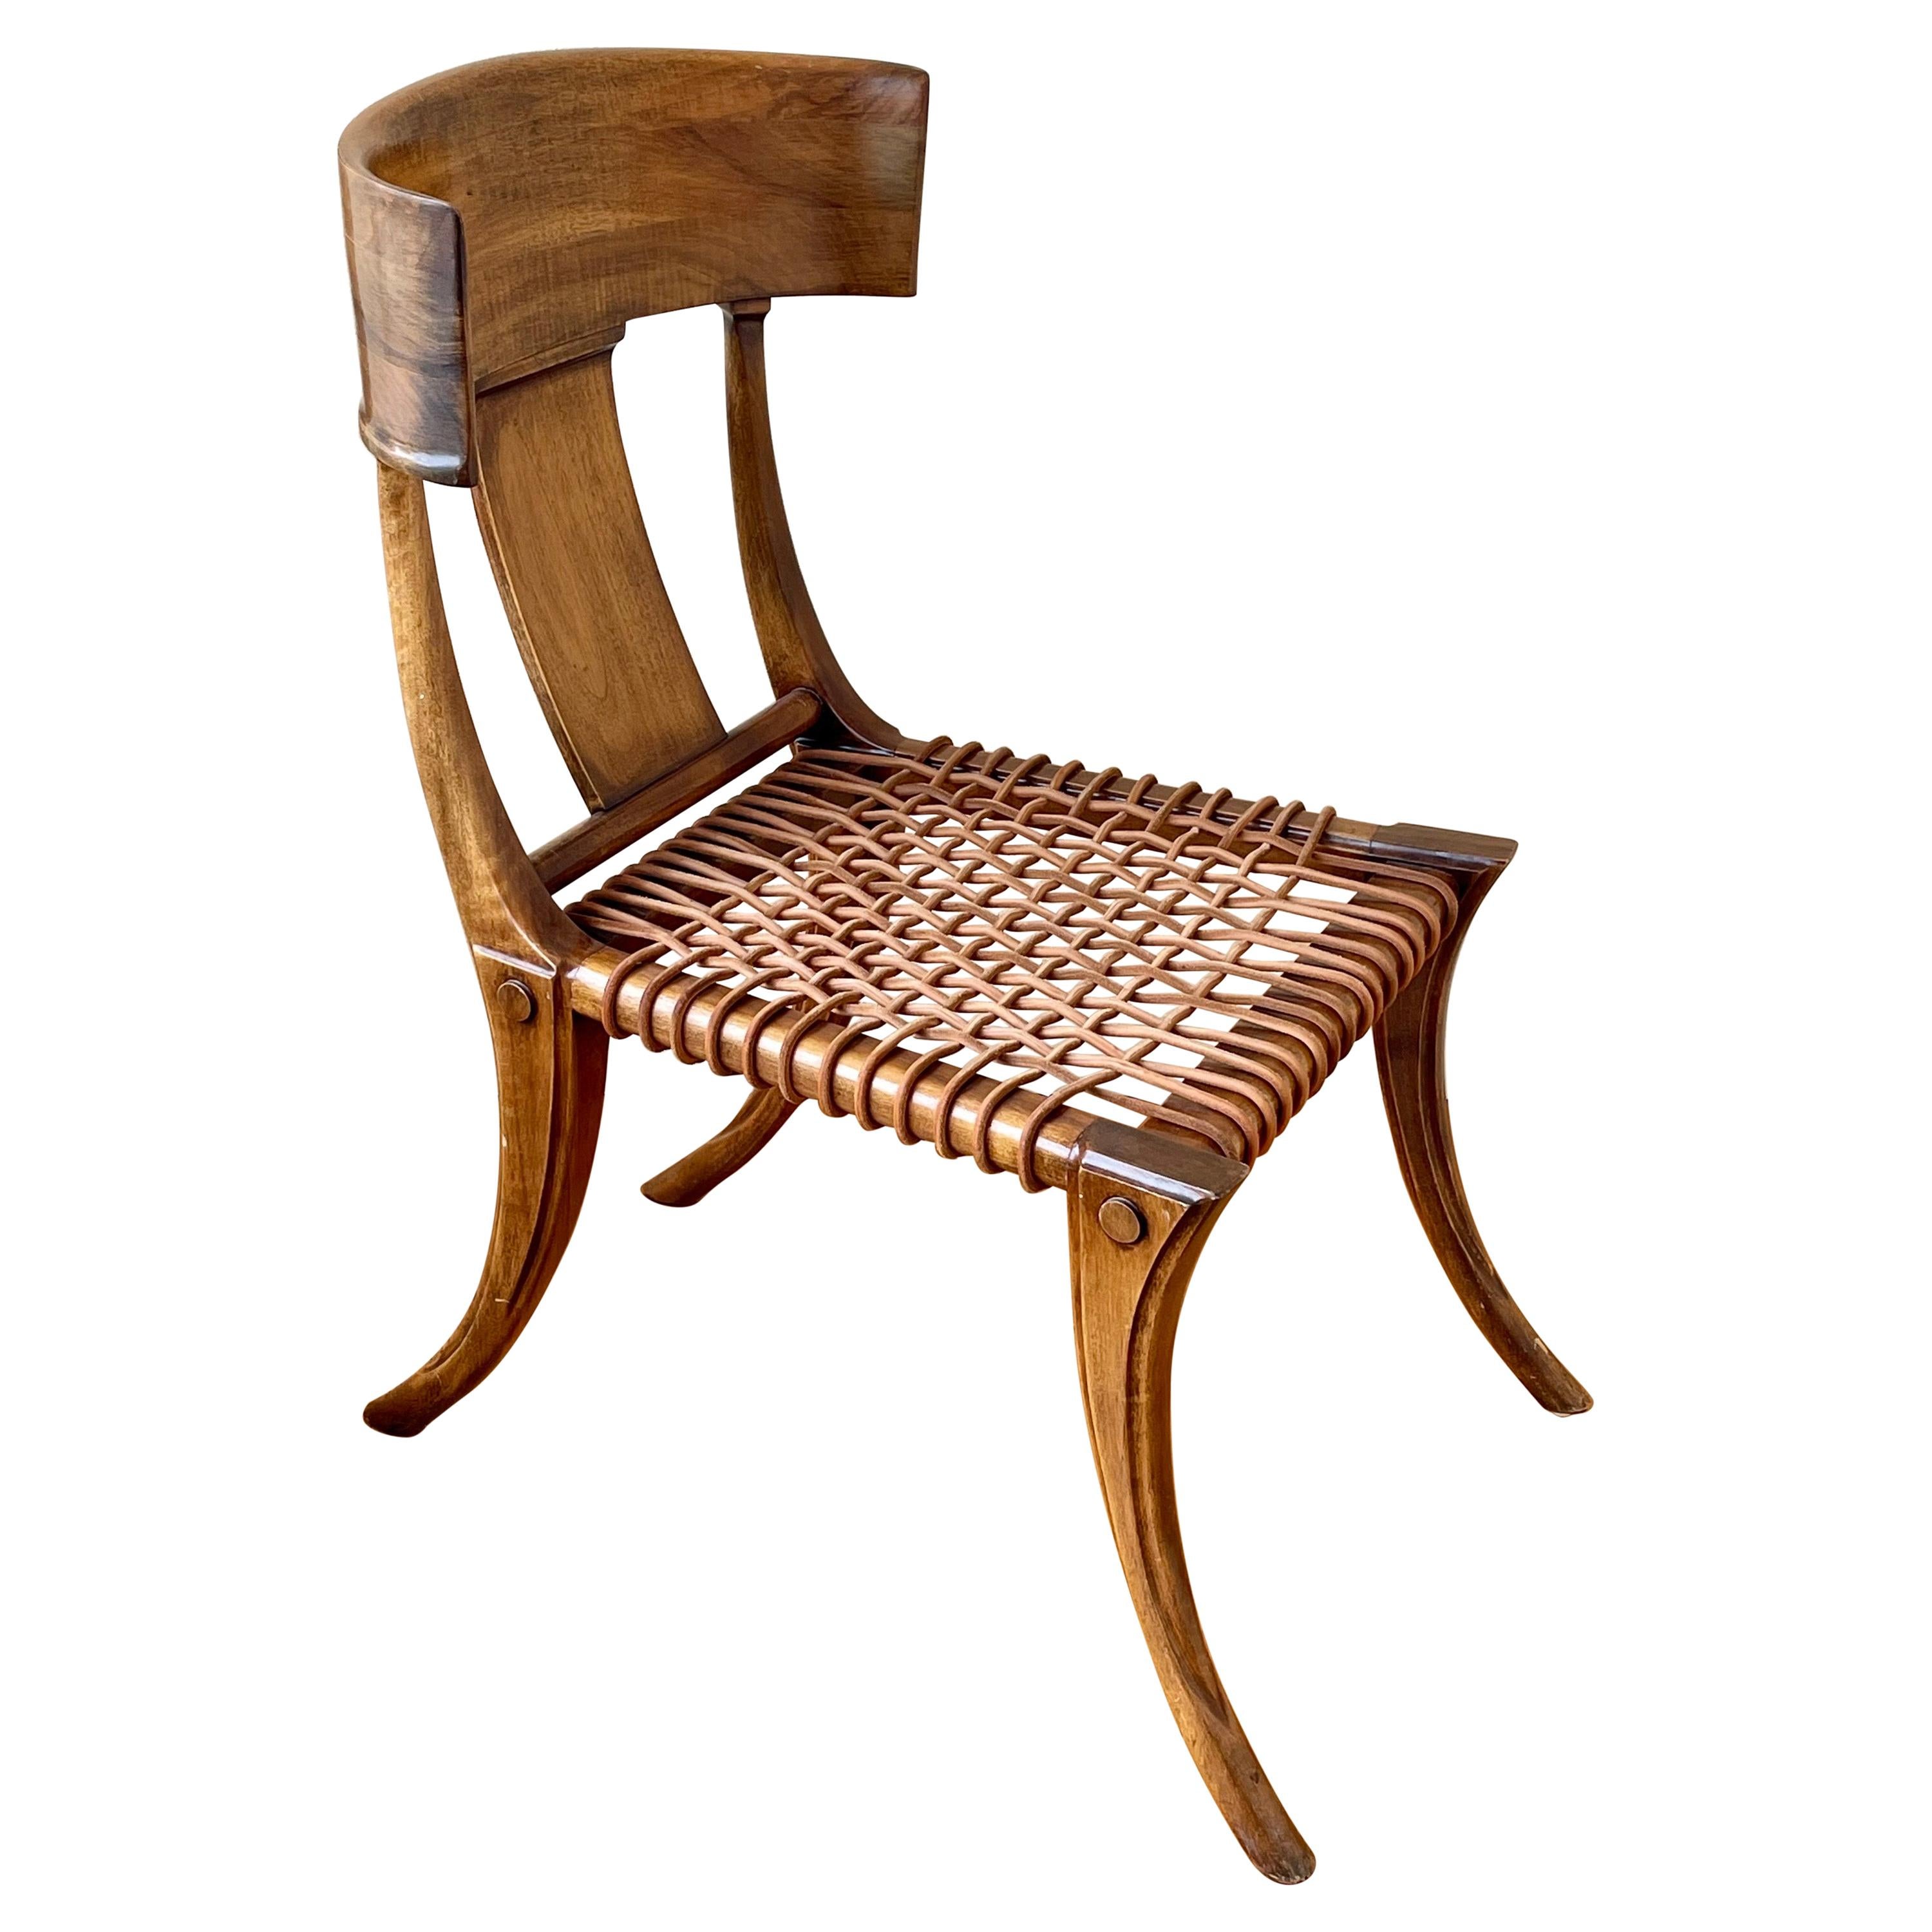 Single Klismos Chair in Walnut Frames with Leather Straps